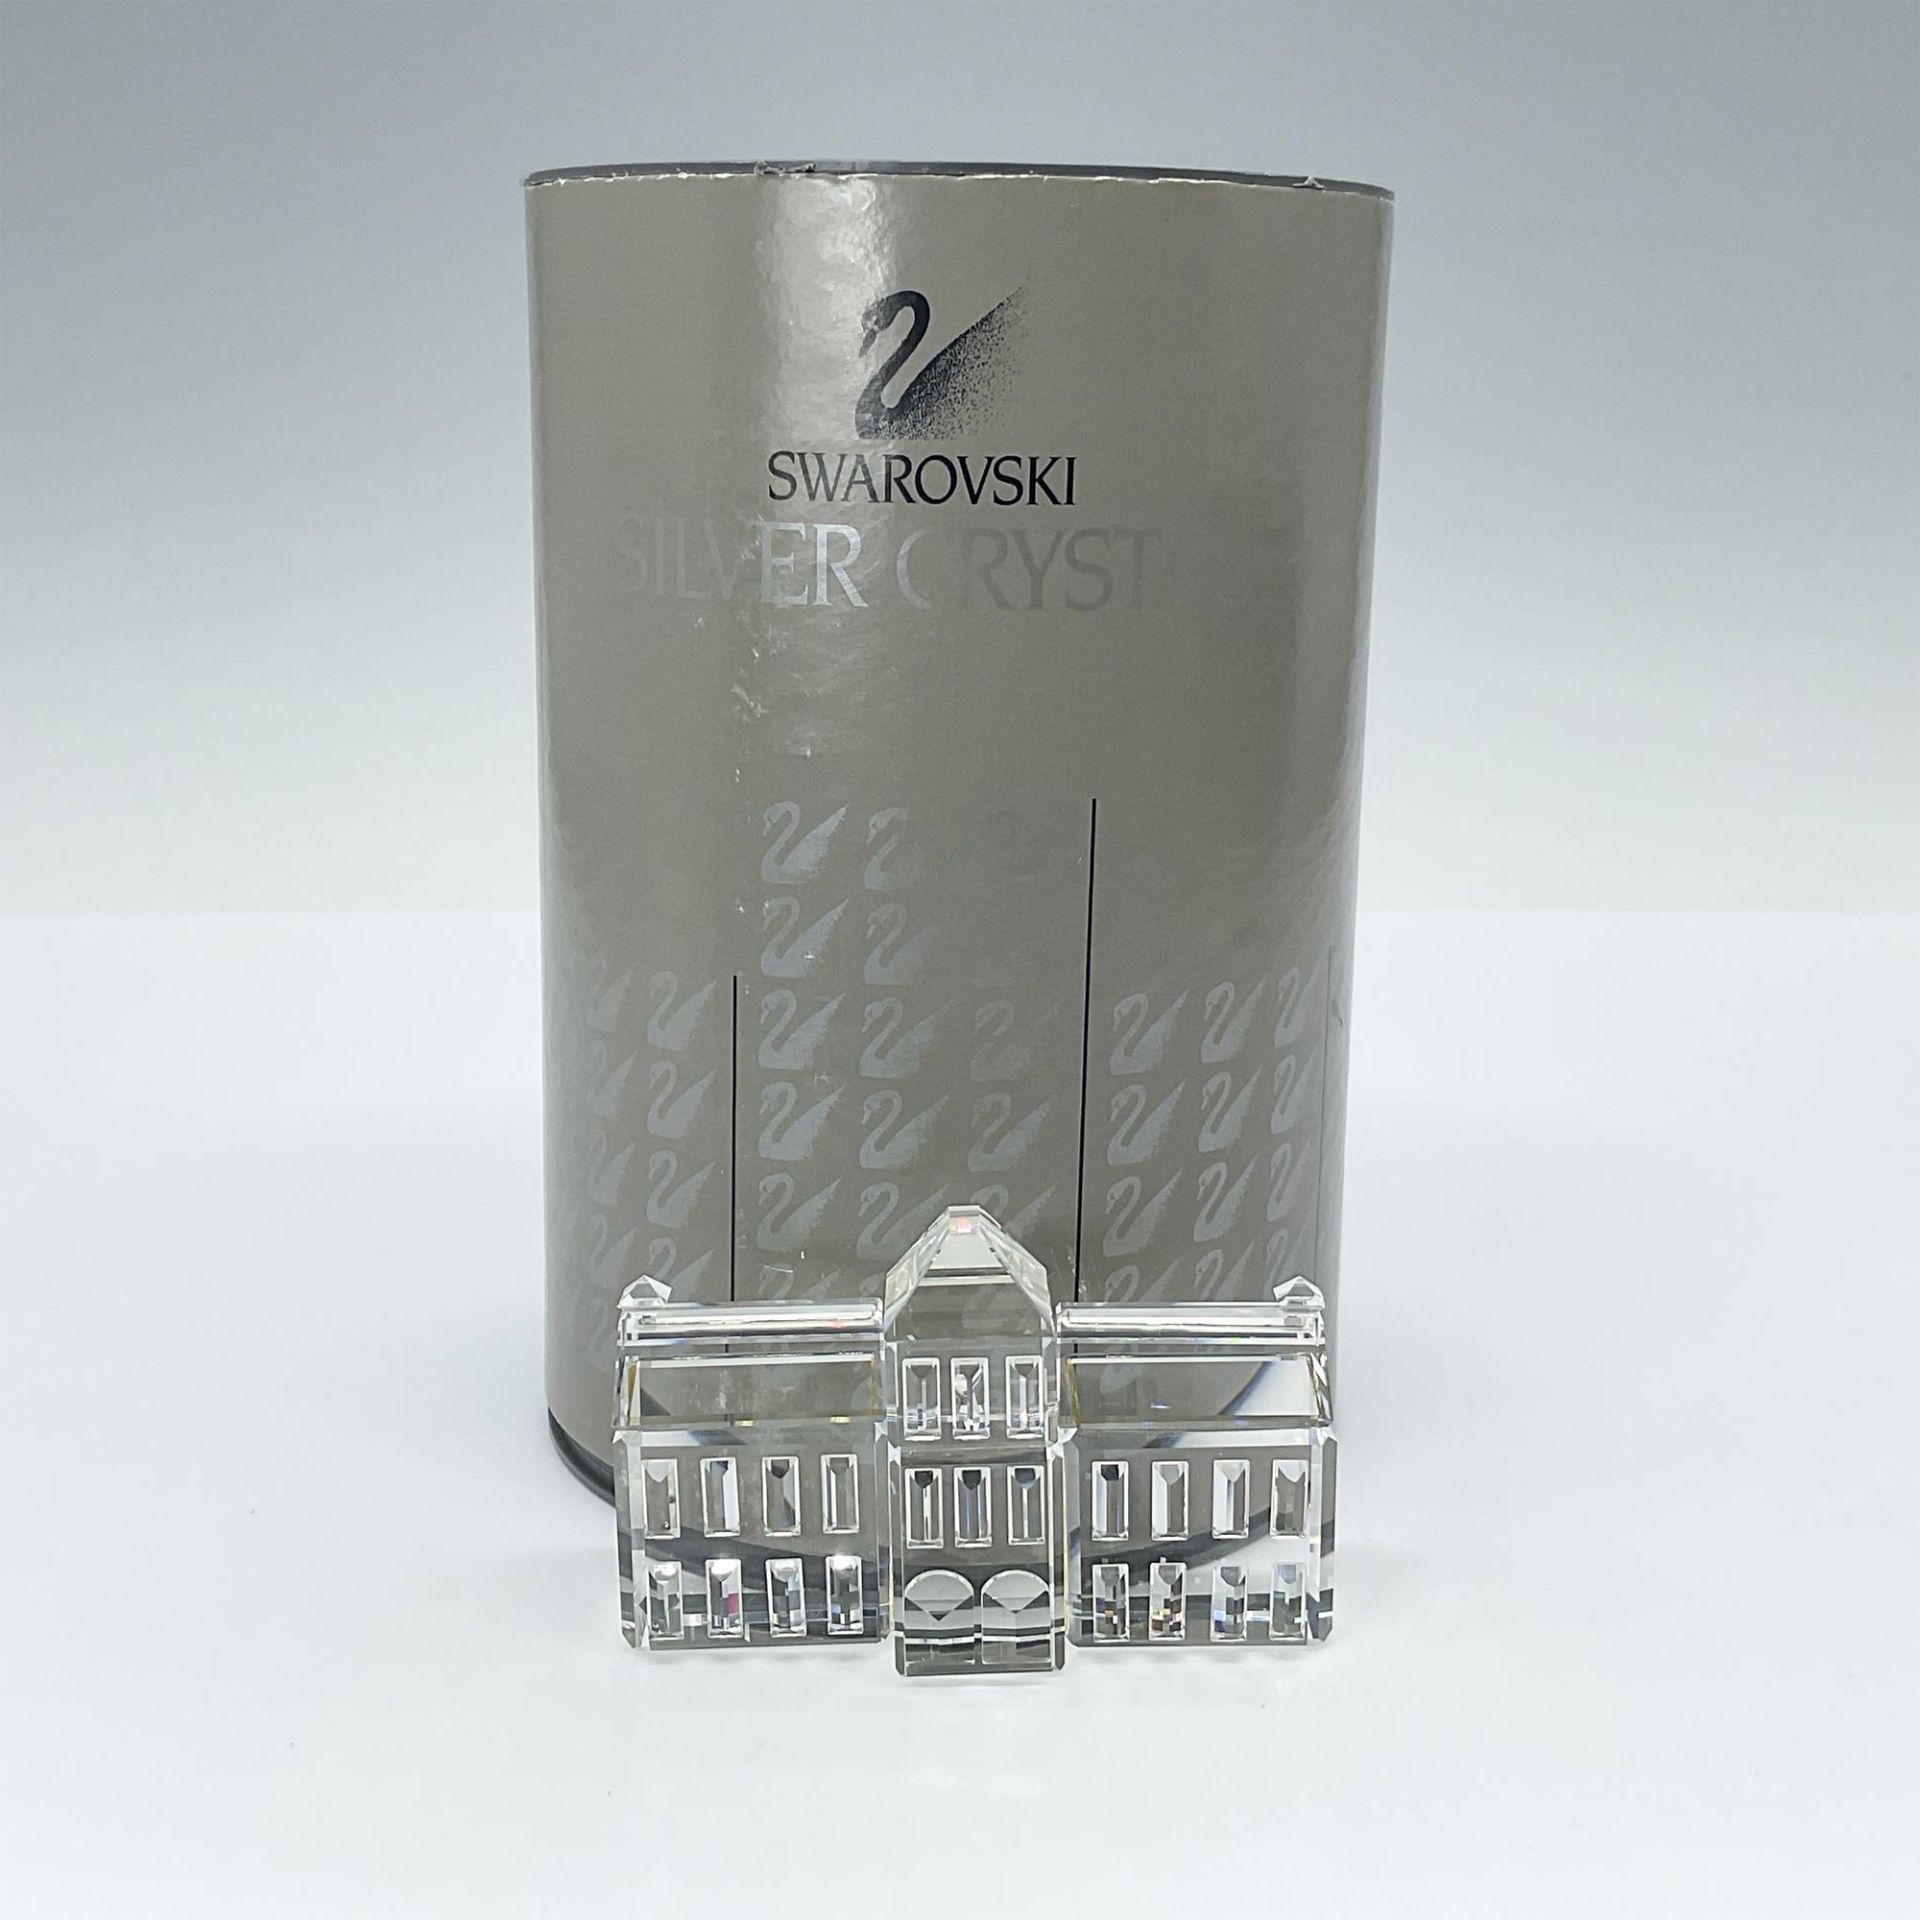 Swarovski Silver Crystal Figurine, City Town Hall - Image 4 of 4